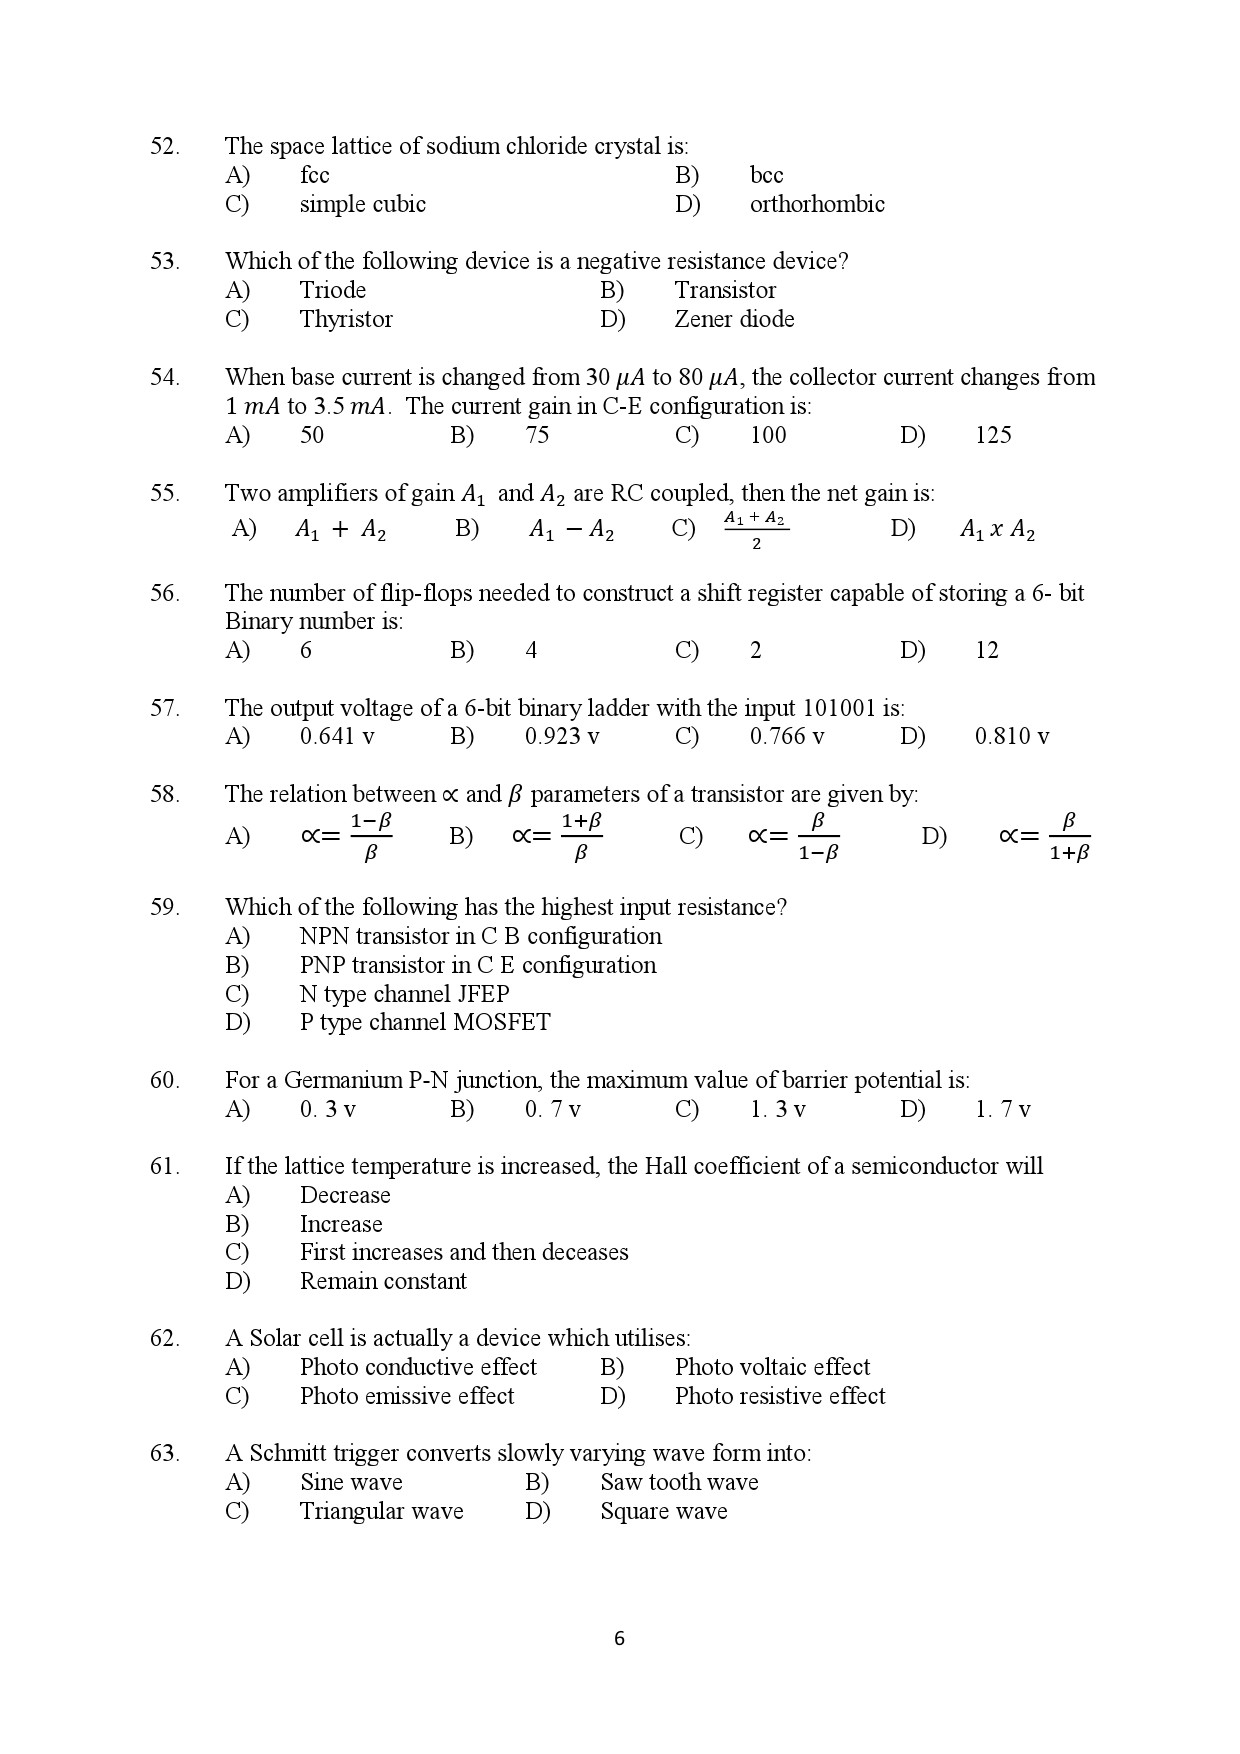 Kerala SET Physics Exam Question Paper February 2018 6